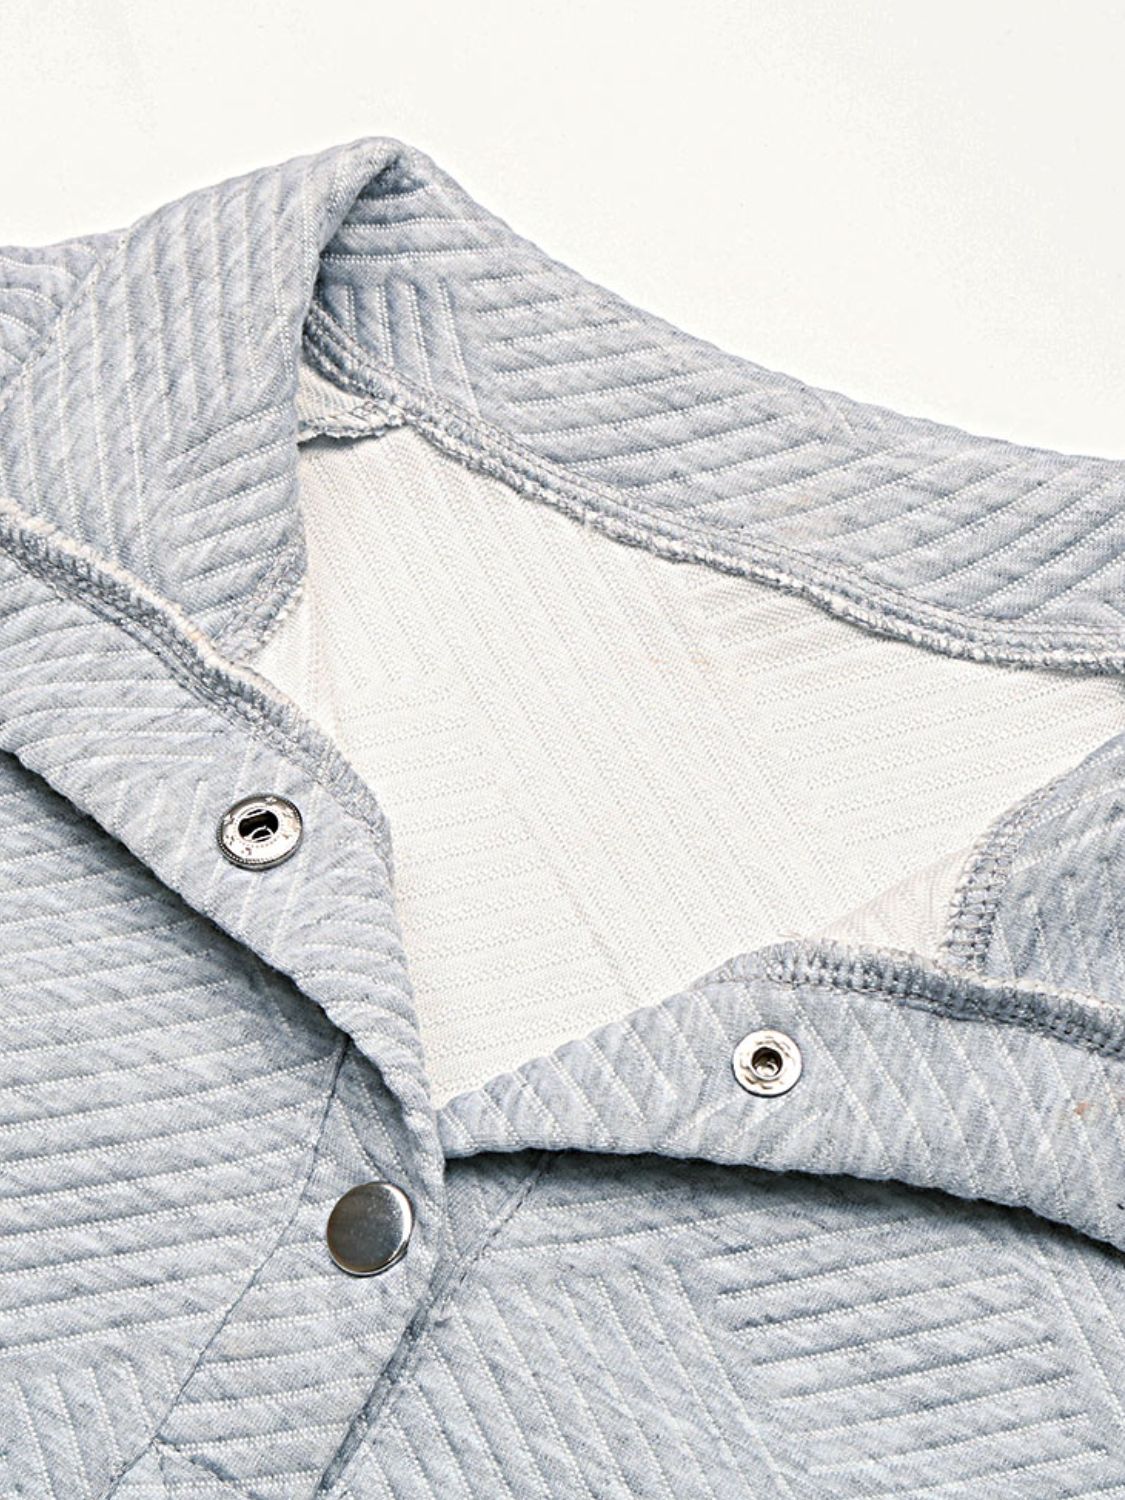 Women’s Raglan Sleeve Collared Neck Sweatshirt with Pocket